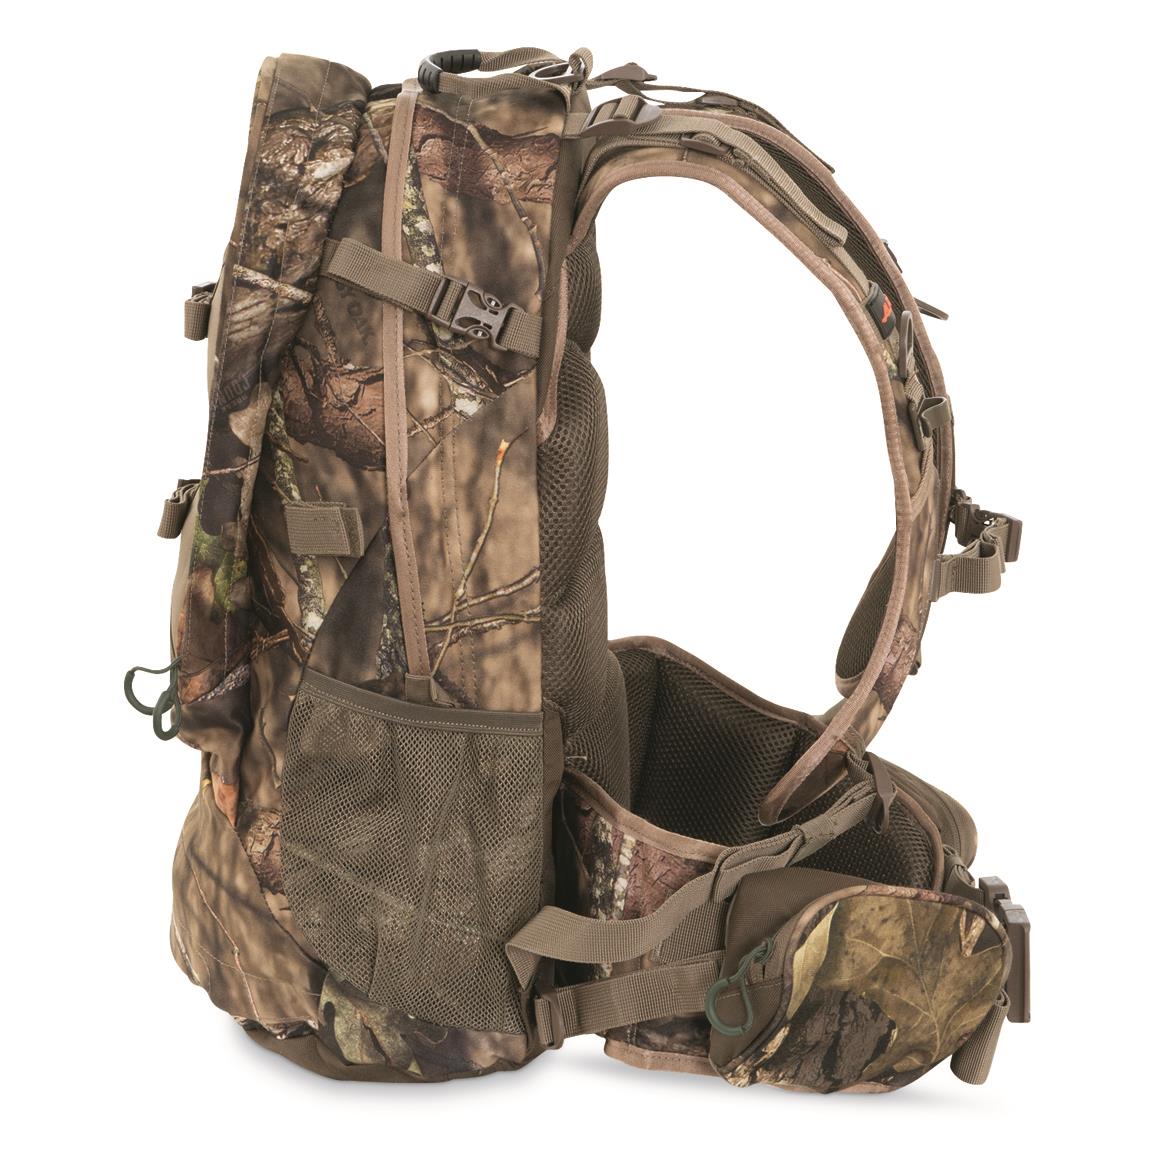 ALPS OutdoorZ Pursuit Backpack - 670143, Hunting Backpacks at Sportsman ...